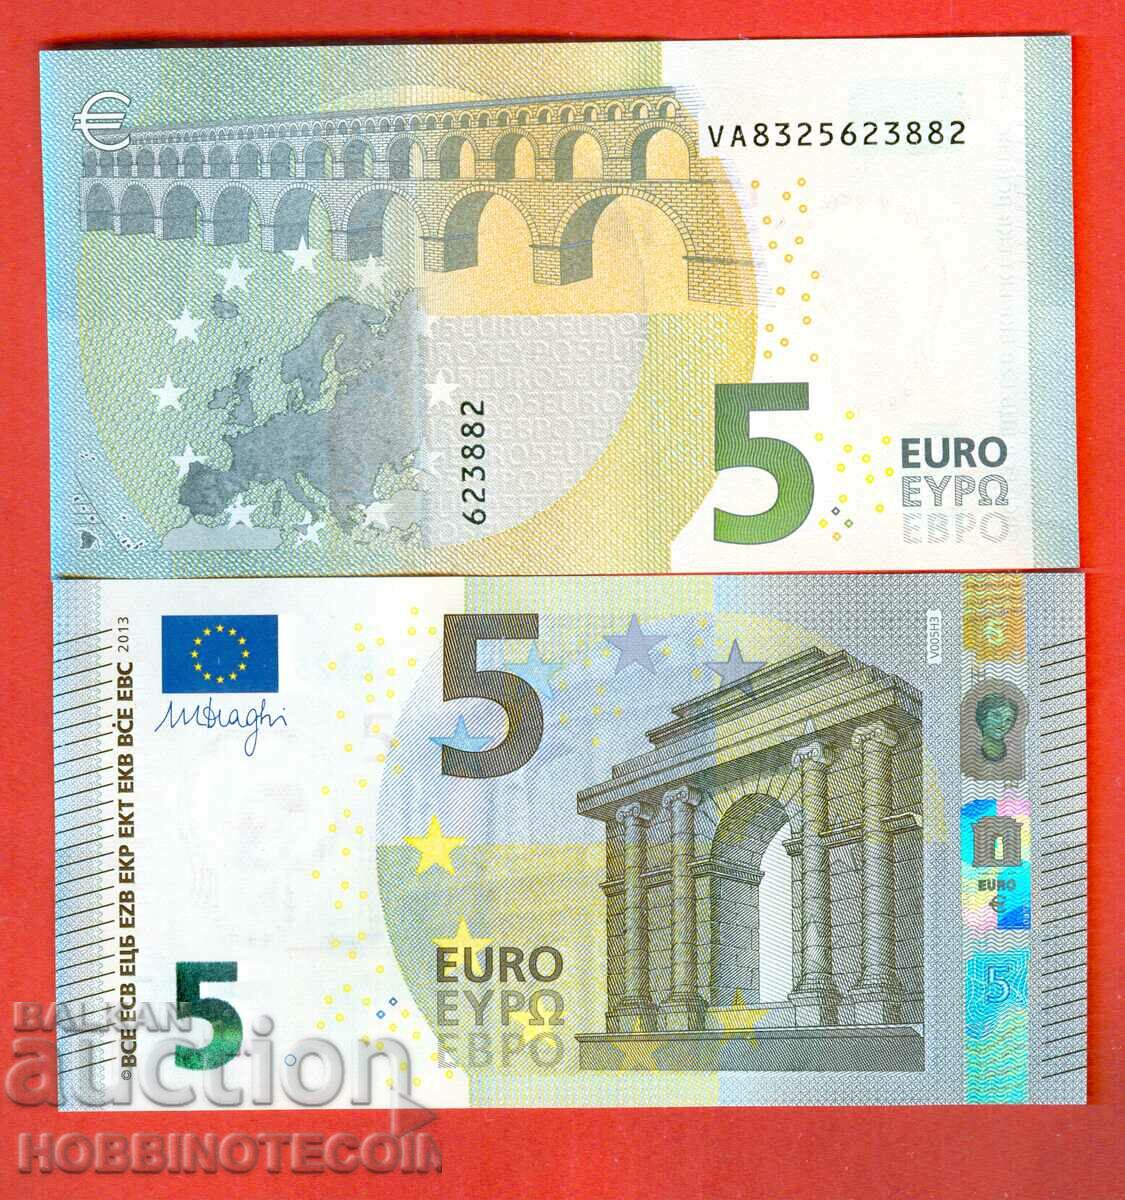 EUROPE EUROPA 5 Euro έκδοση 2013 - VA - NEW UNC